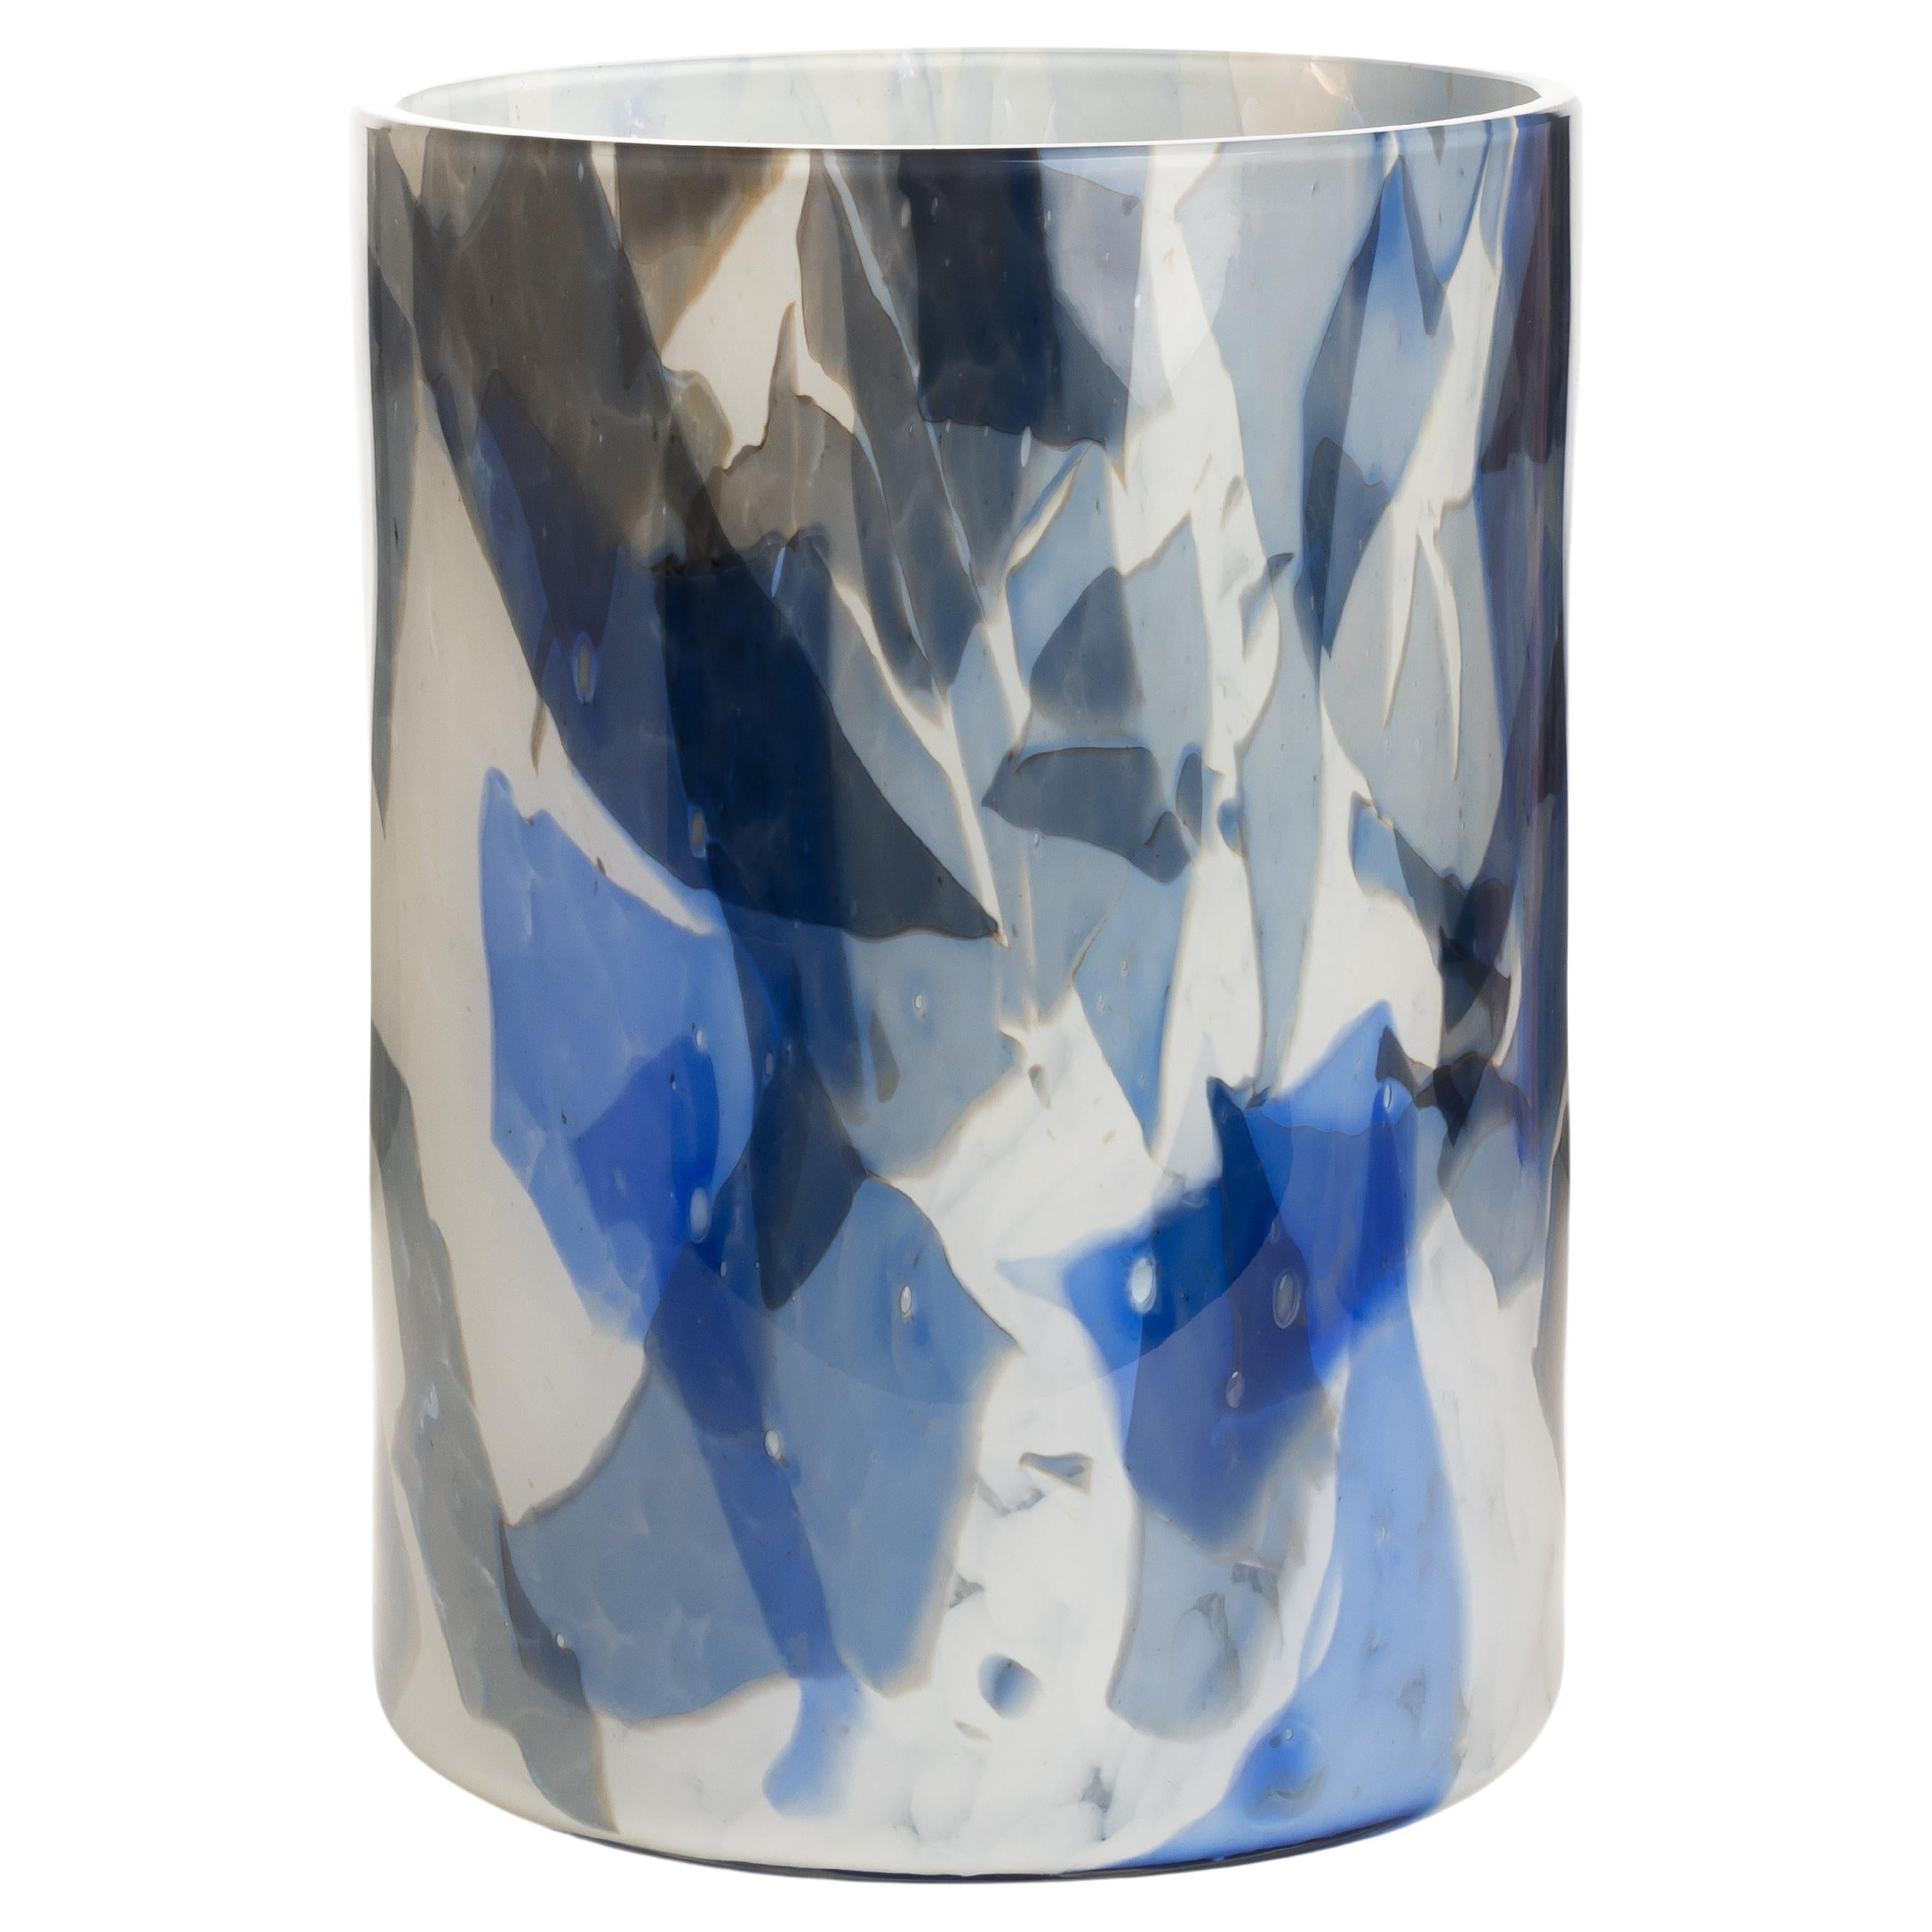 Grand vase en verre de Murano bleu nougat par Stories of Italy